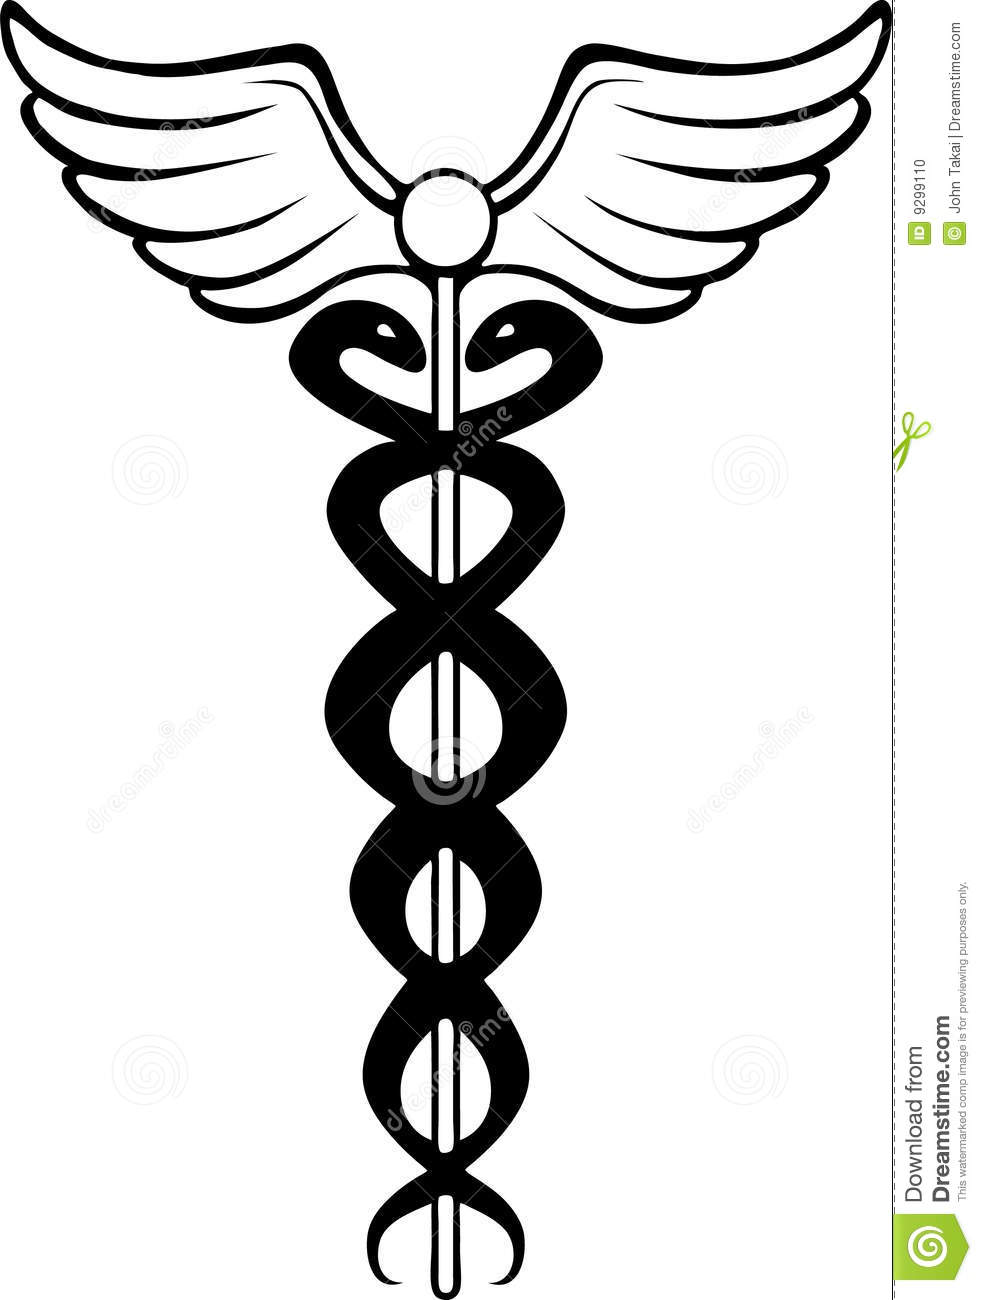 Medical Symbol Drawing at GetDrawings | Free download